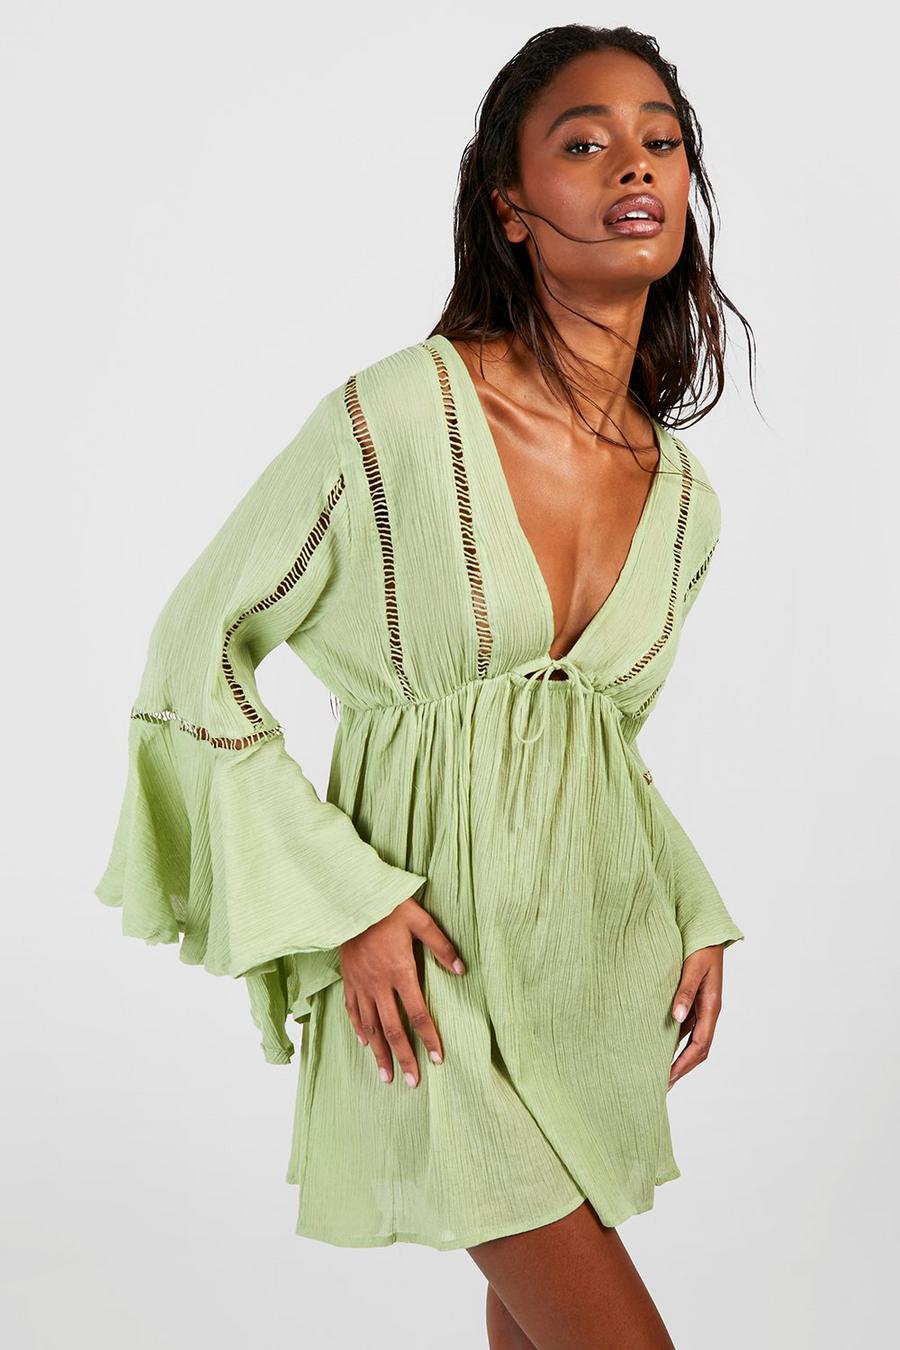 Beach Wear Dresses For Women Co-Ord Set Two Piece Dark Green Geometric  Print Dress Top Short And Shrug - X-Small